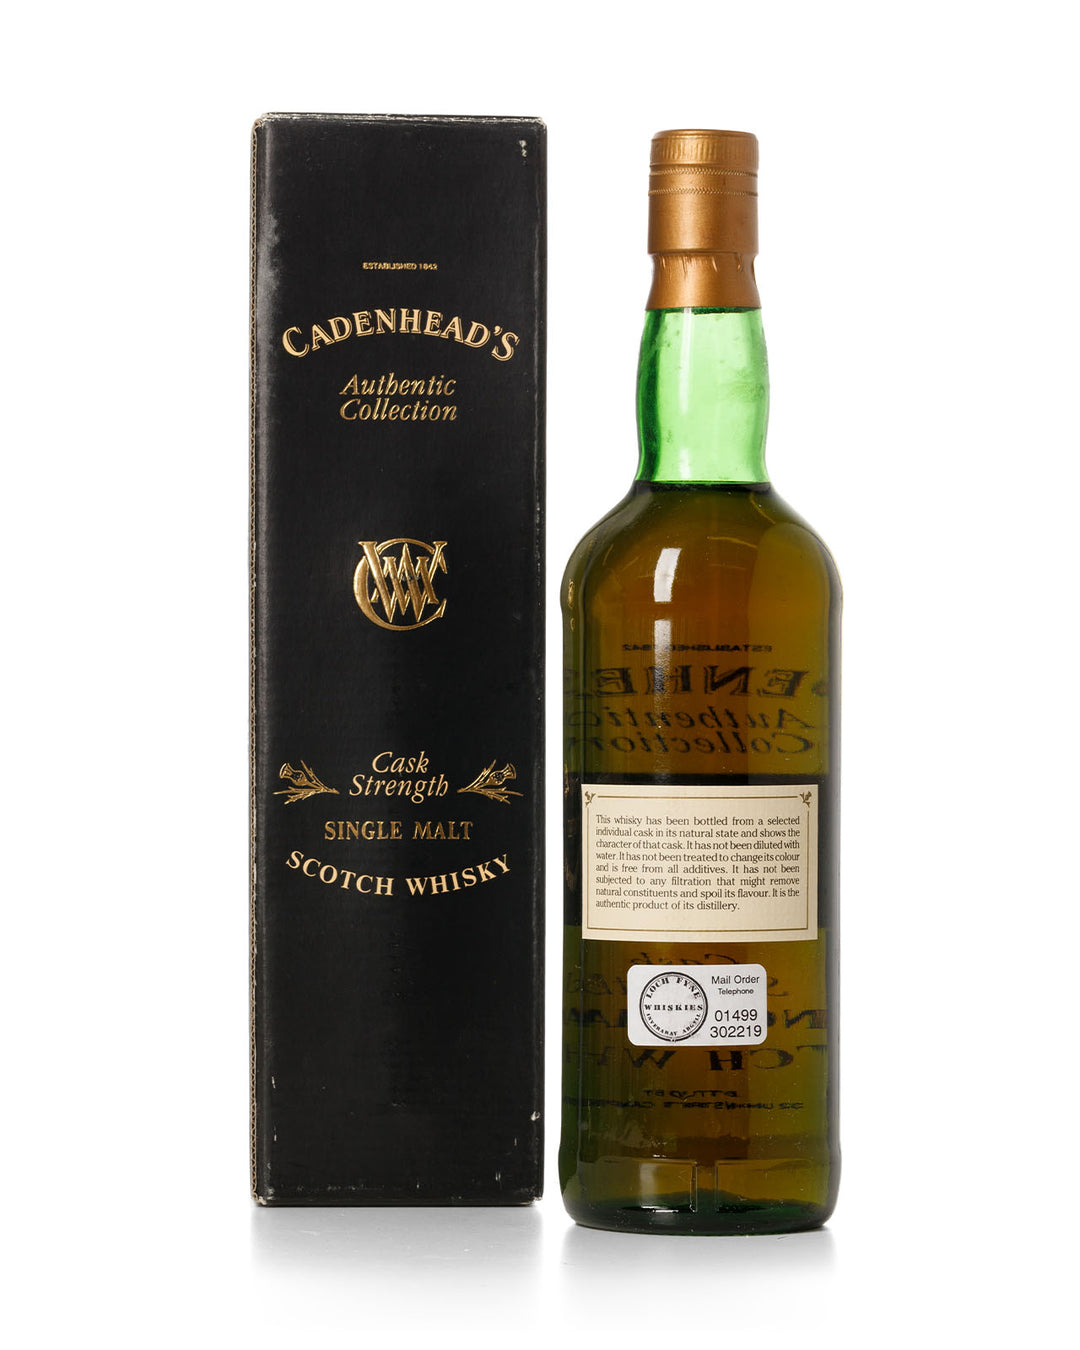 Glen Elgin-Glenlivet 1971 22 Year Old Cadenheads Authentic Collection Bottled 1993 With Original Box